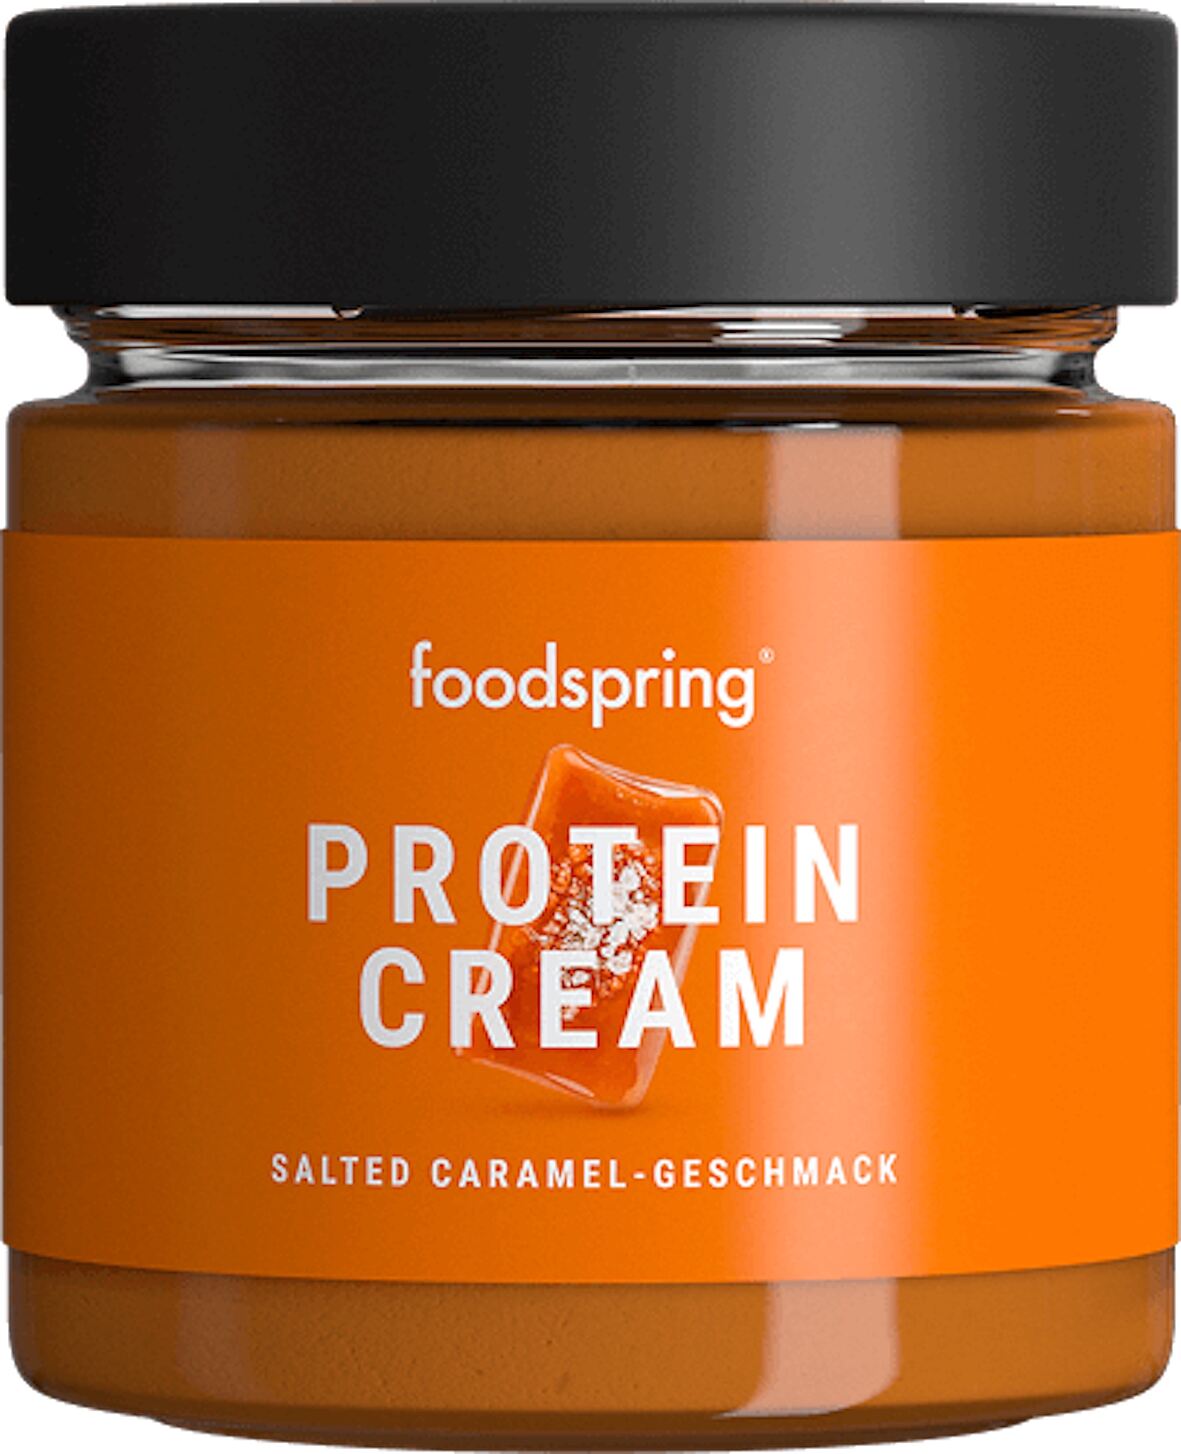 foodspring_Protein Cream_Salted Caramel_EUR 5,99